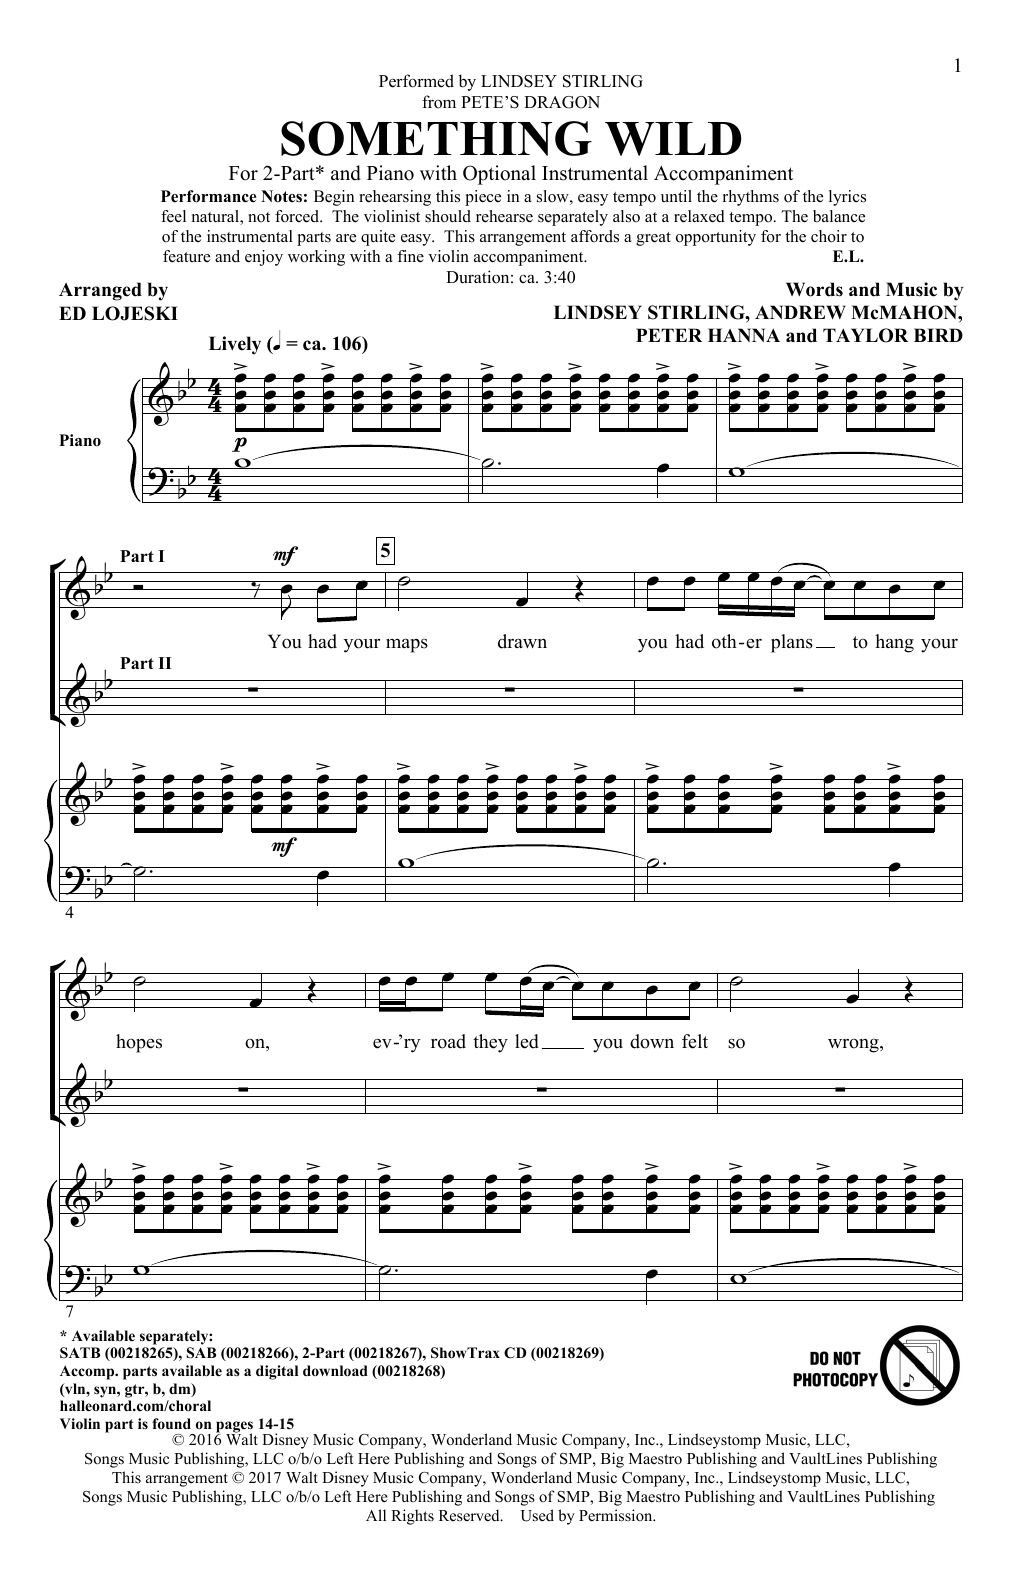 Download Lindsey Stirling Something Wild (arr. Ed Lojeski) Sheet Music